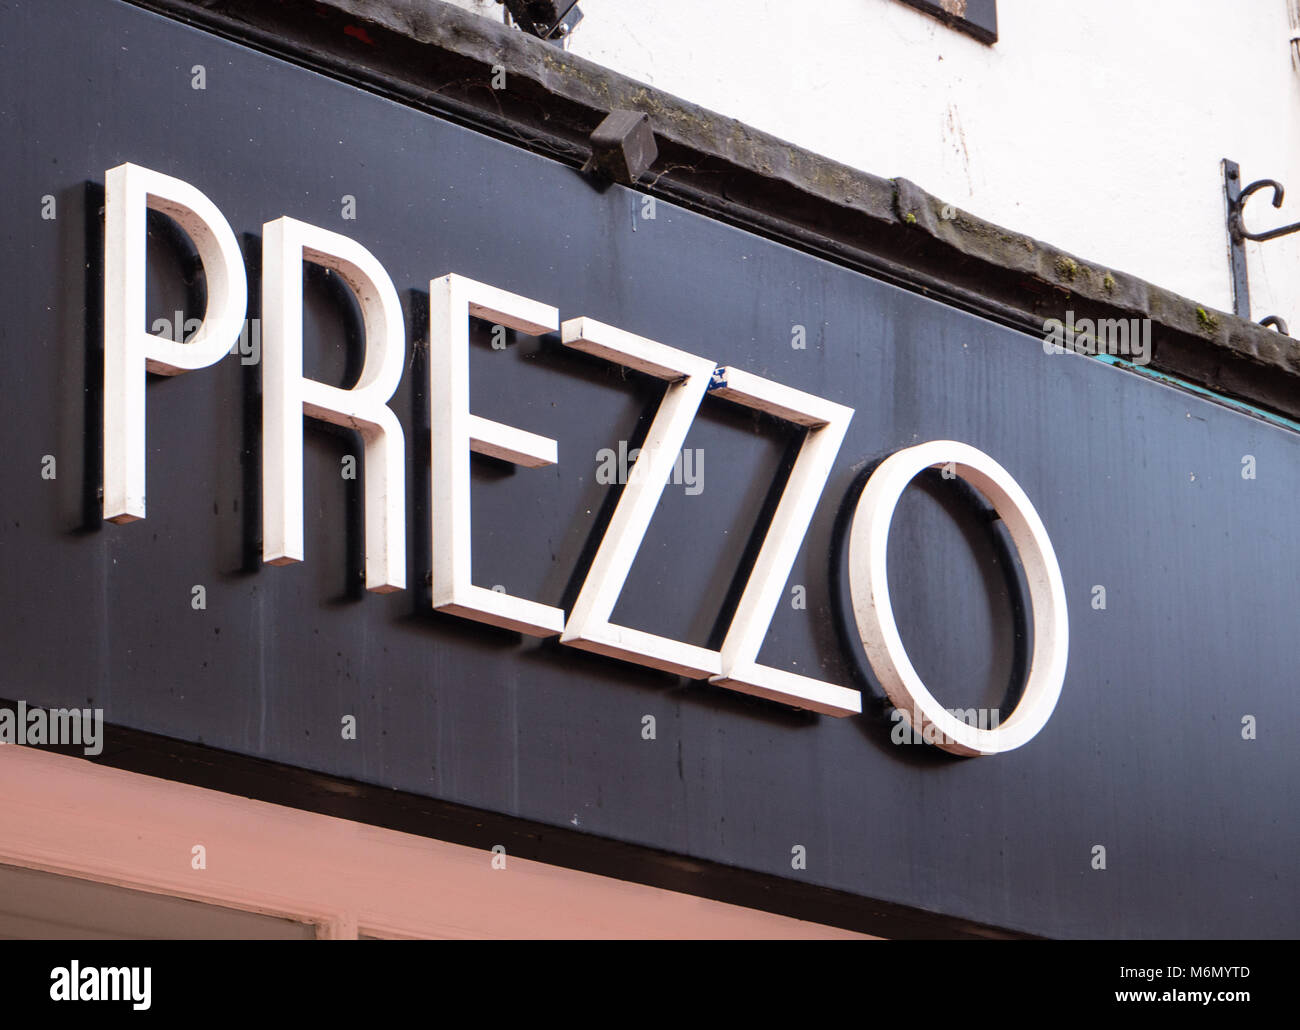 Prezzo Italienische Restaurant, Reading, Berkshire, England. Stockfoto